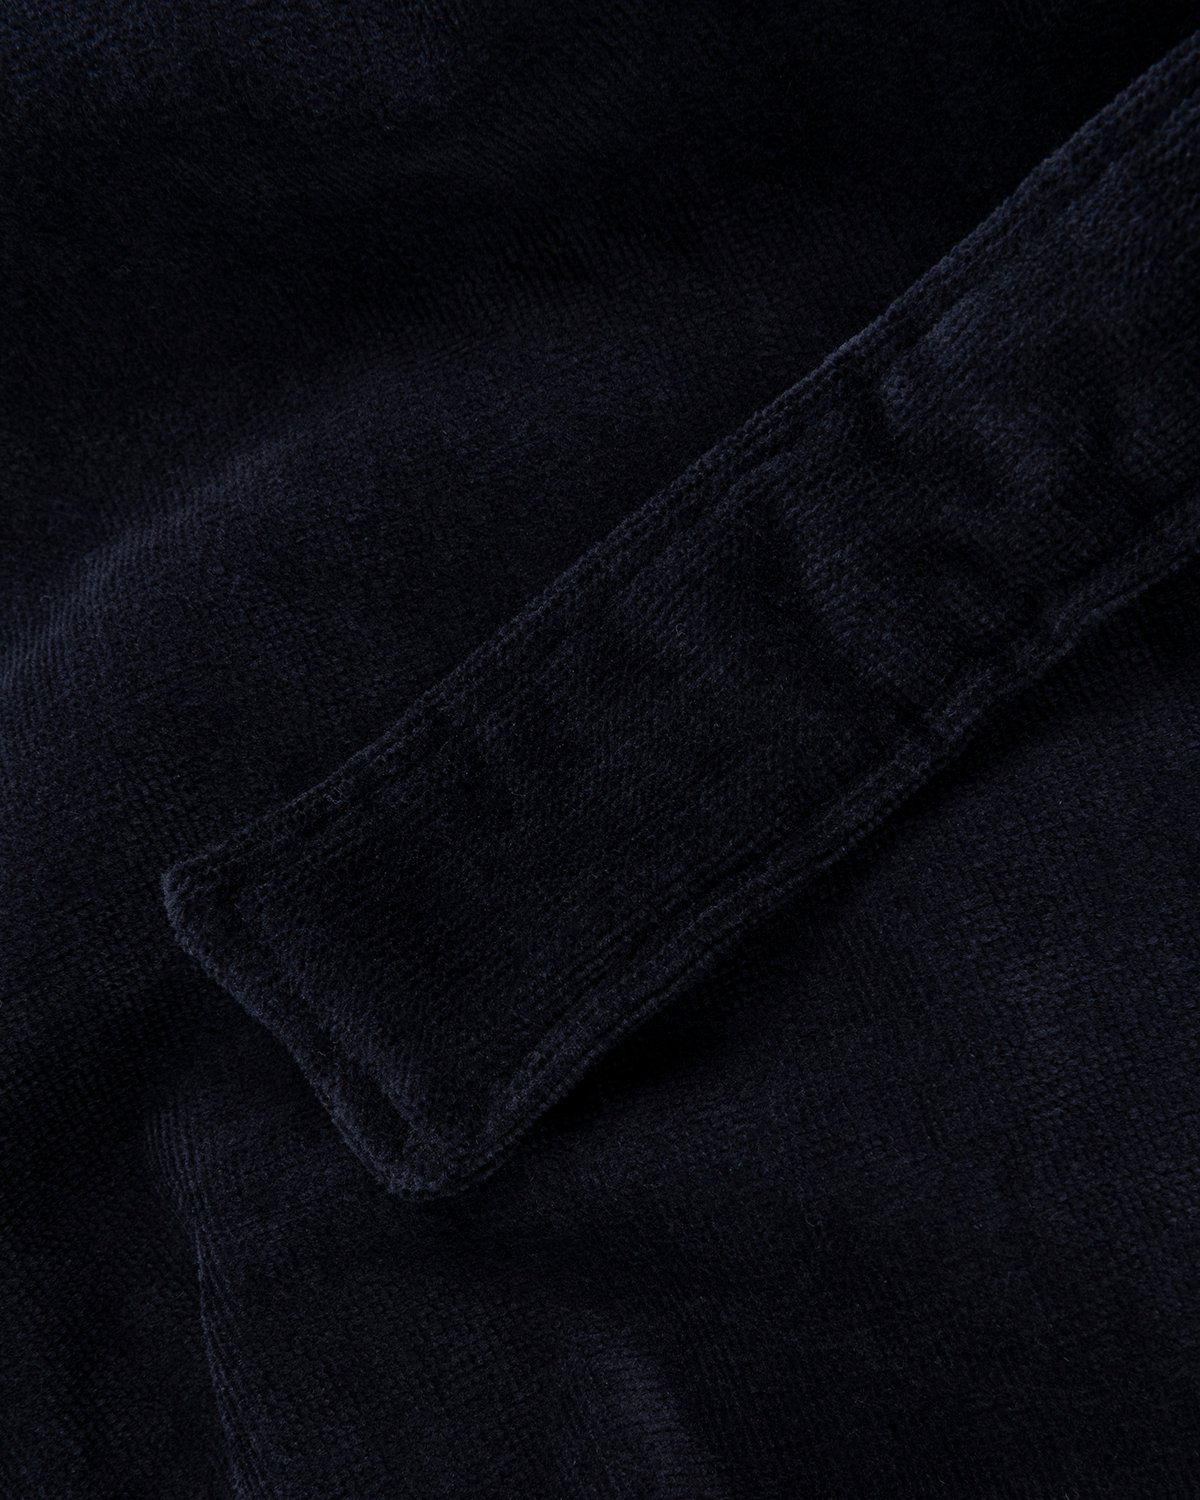 Y-3 - Cotton Bathrobe Black - Lifestyle - Black - Image 6